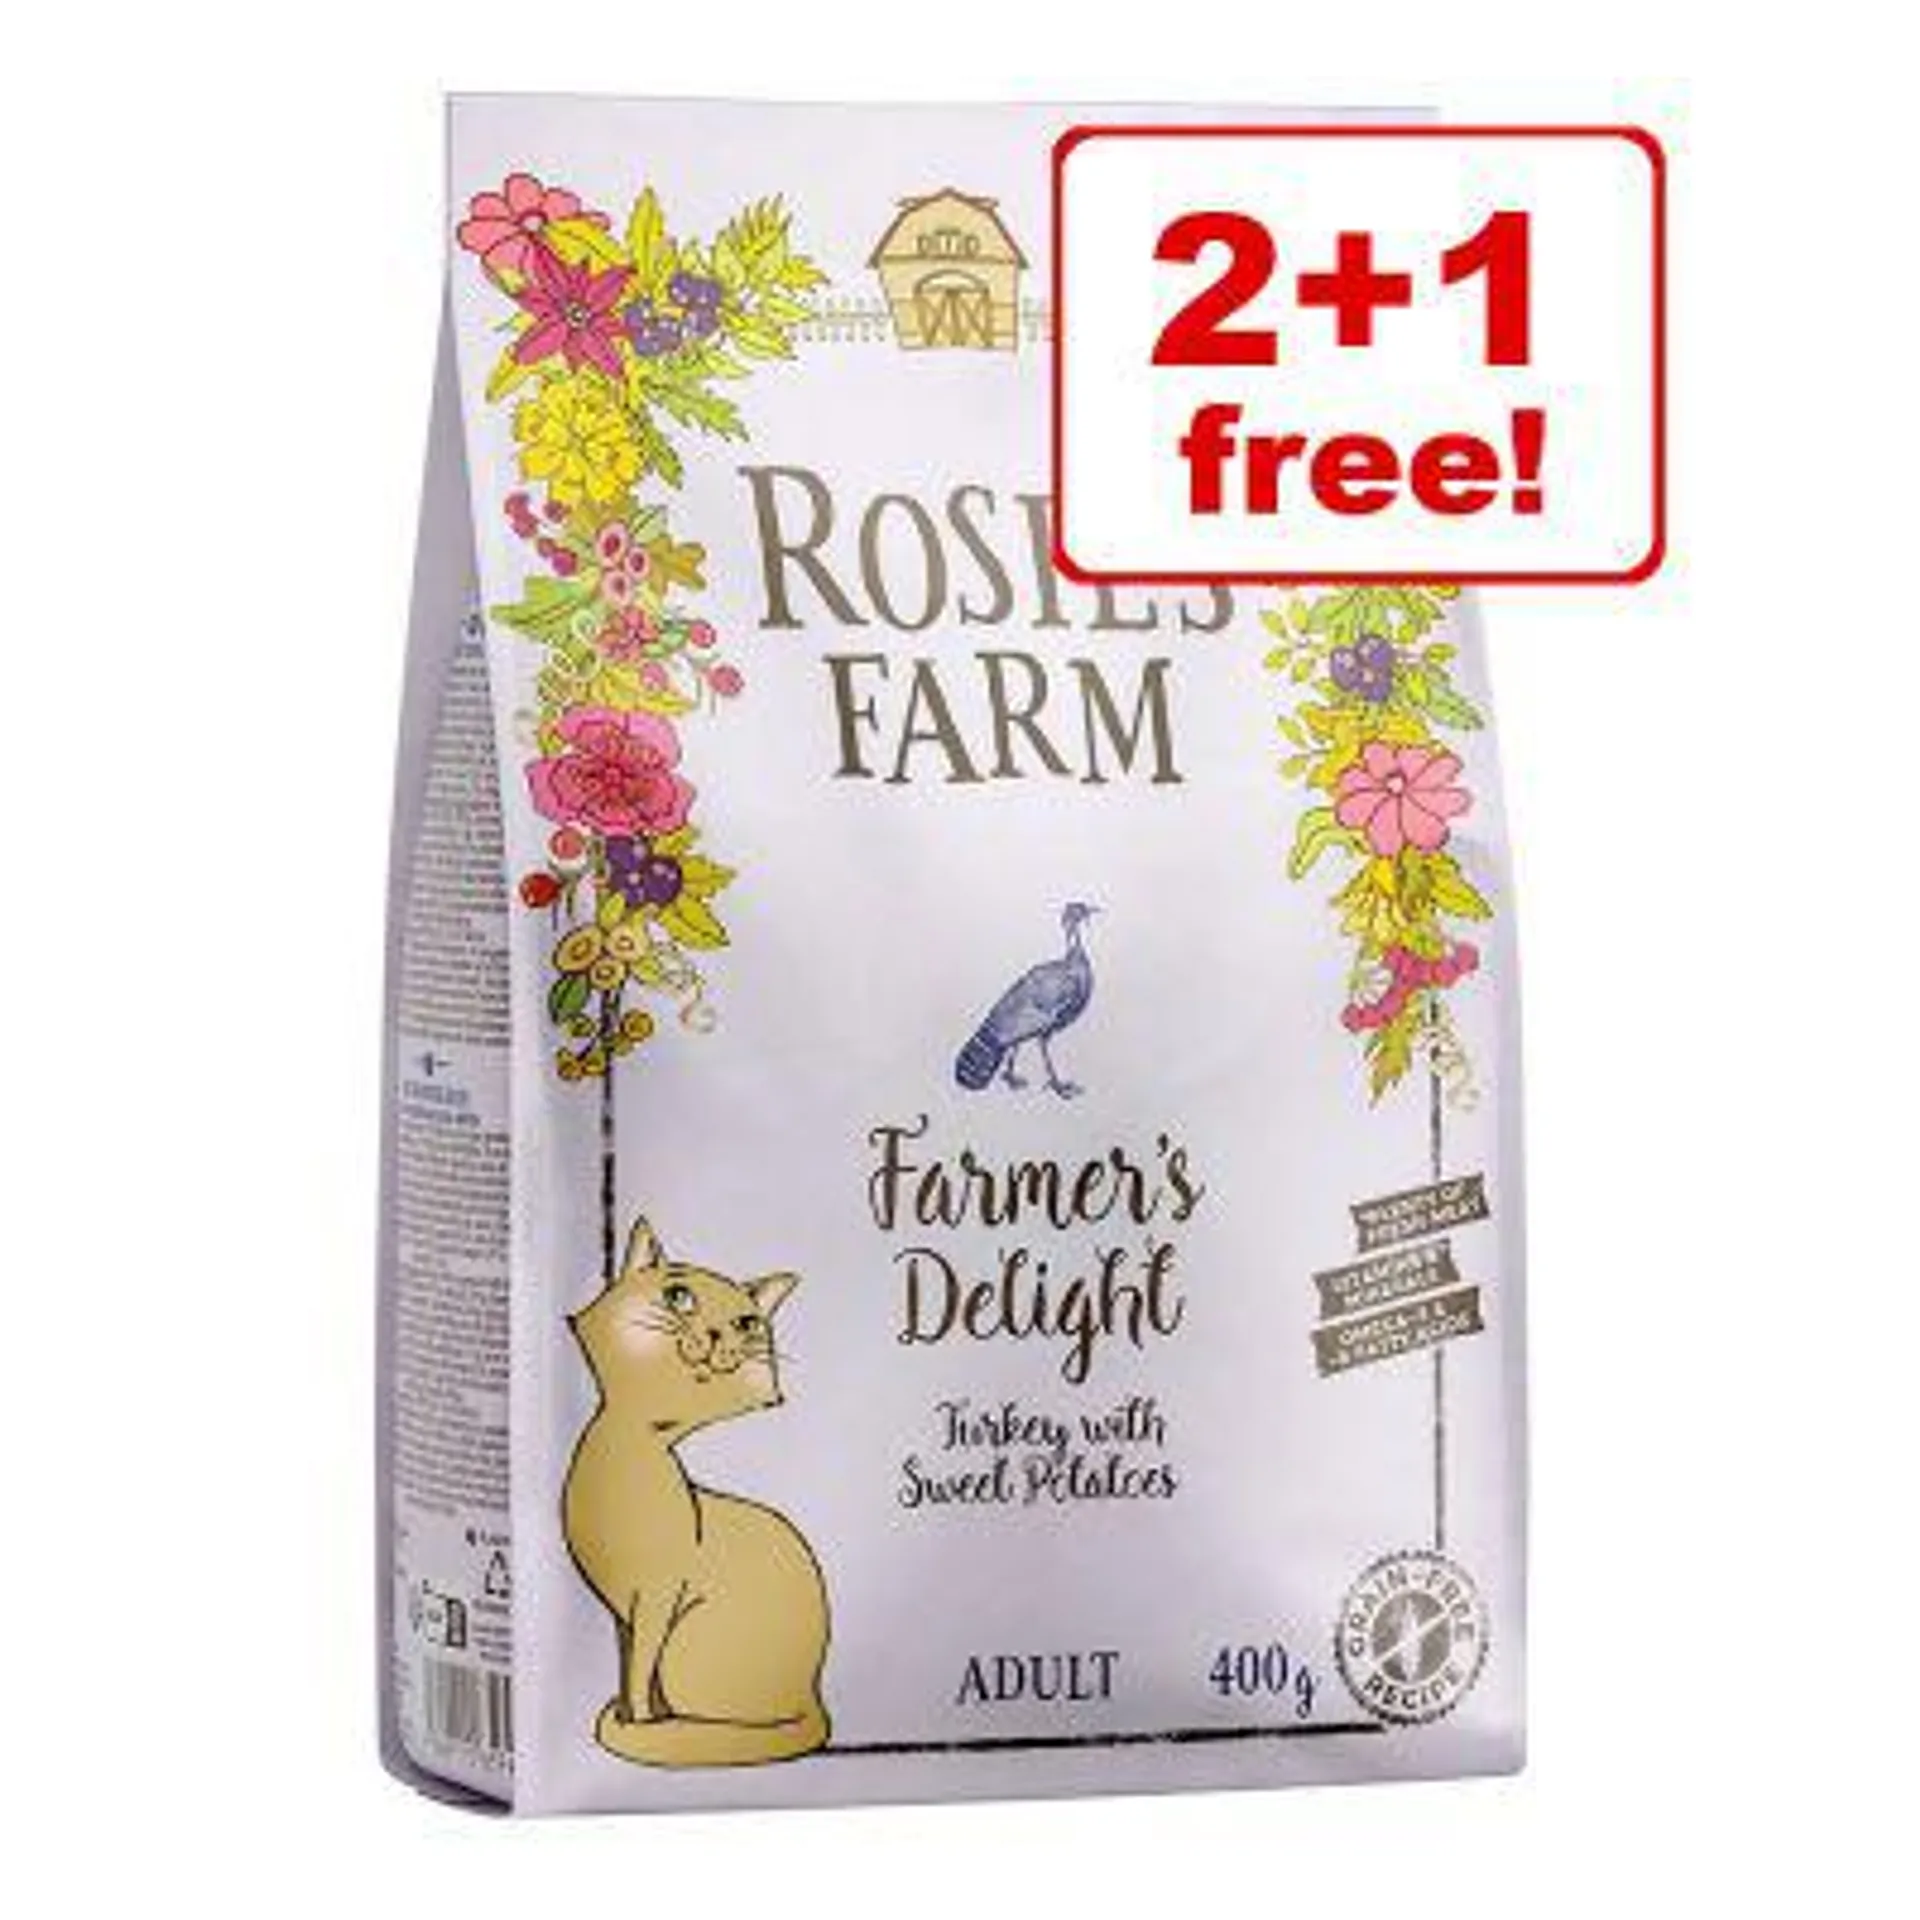 3 x 400g Rosie's Farm Dry Cat Food - 2 + 1 Free!*